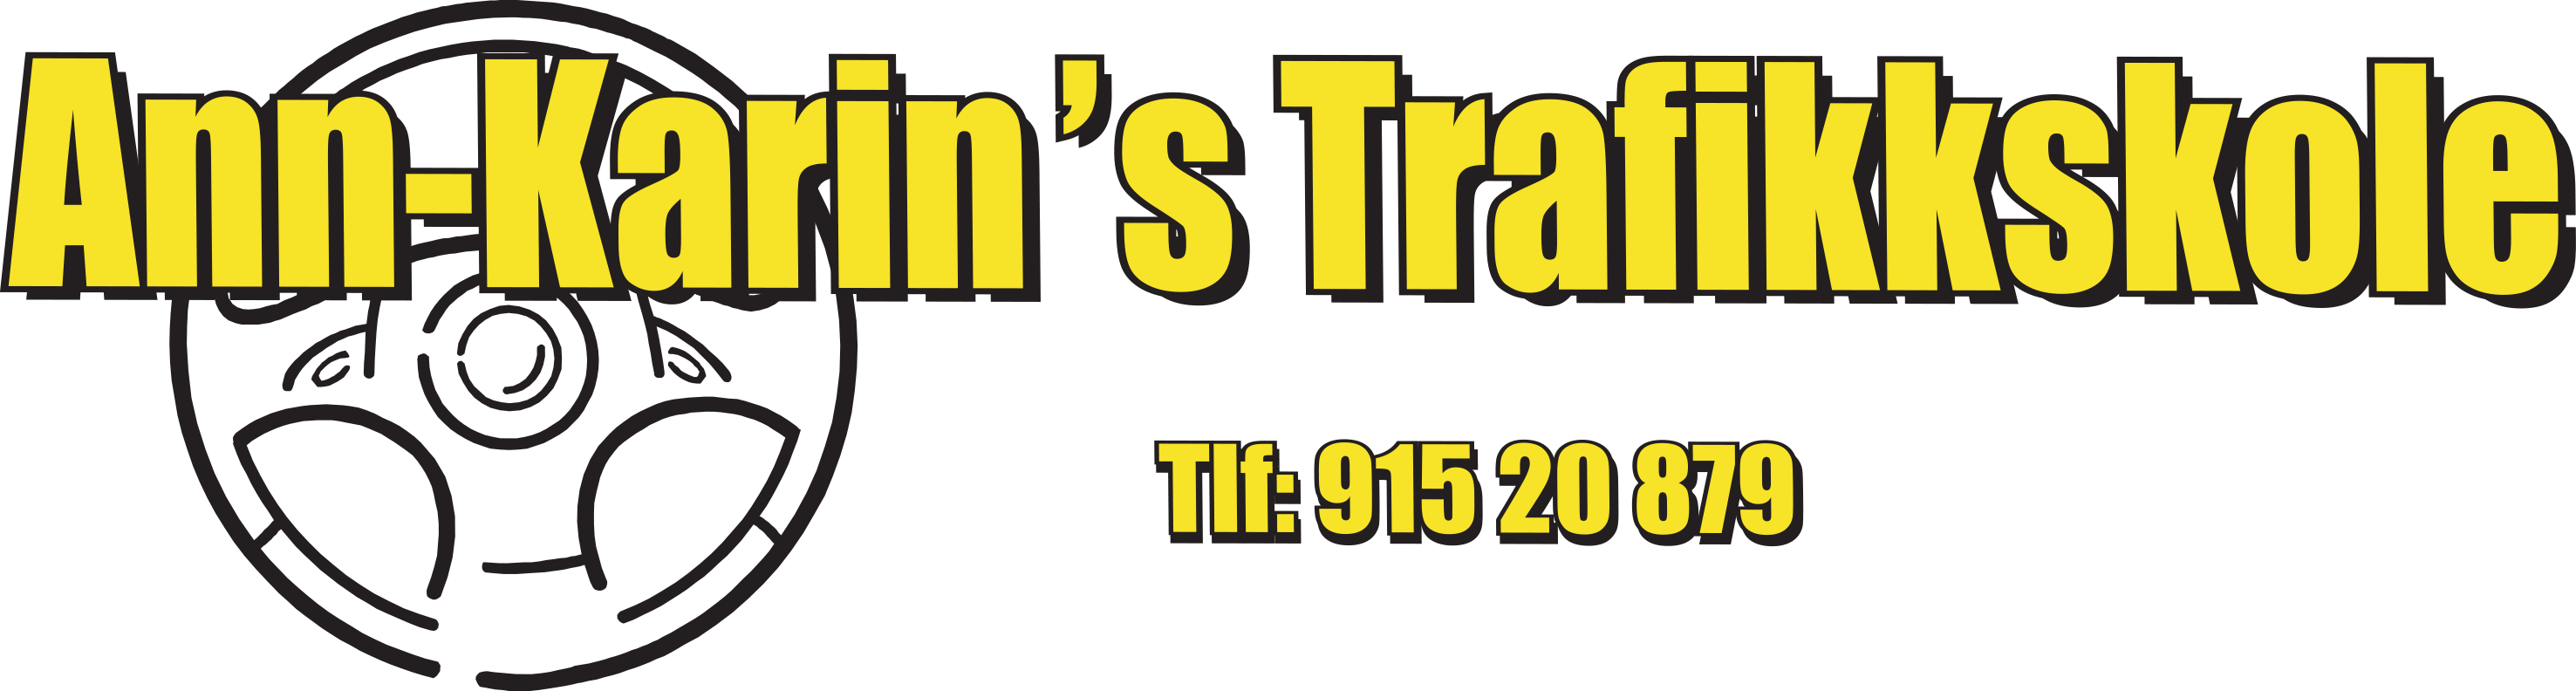 Logo Ann-Karin's Trafikkskole AS